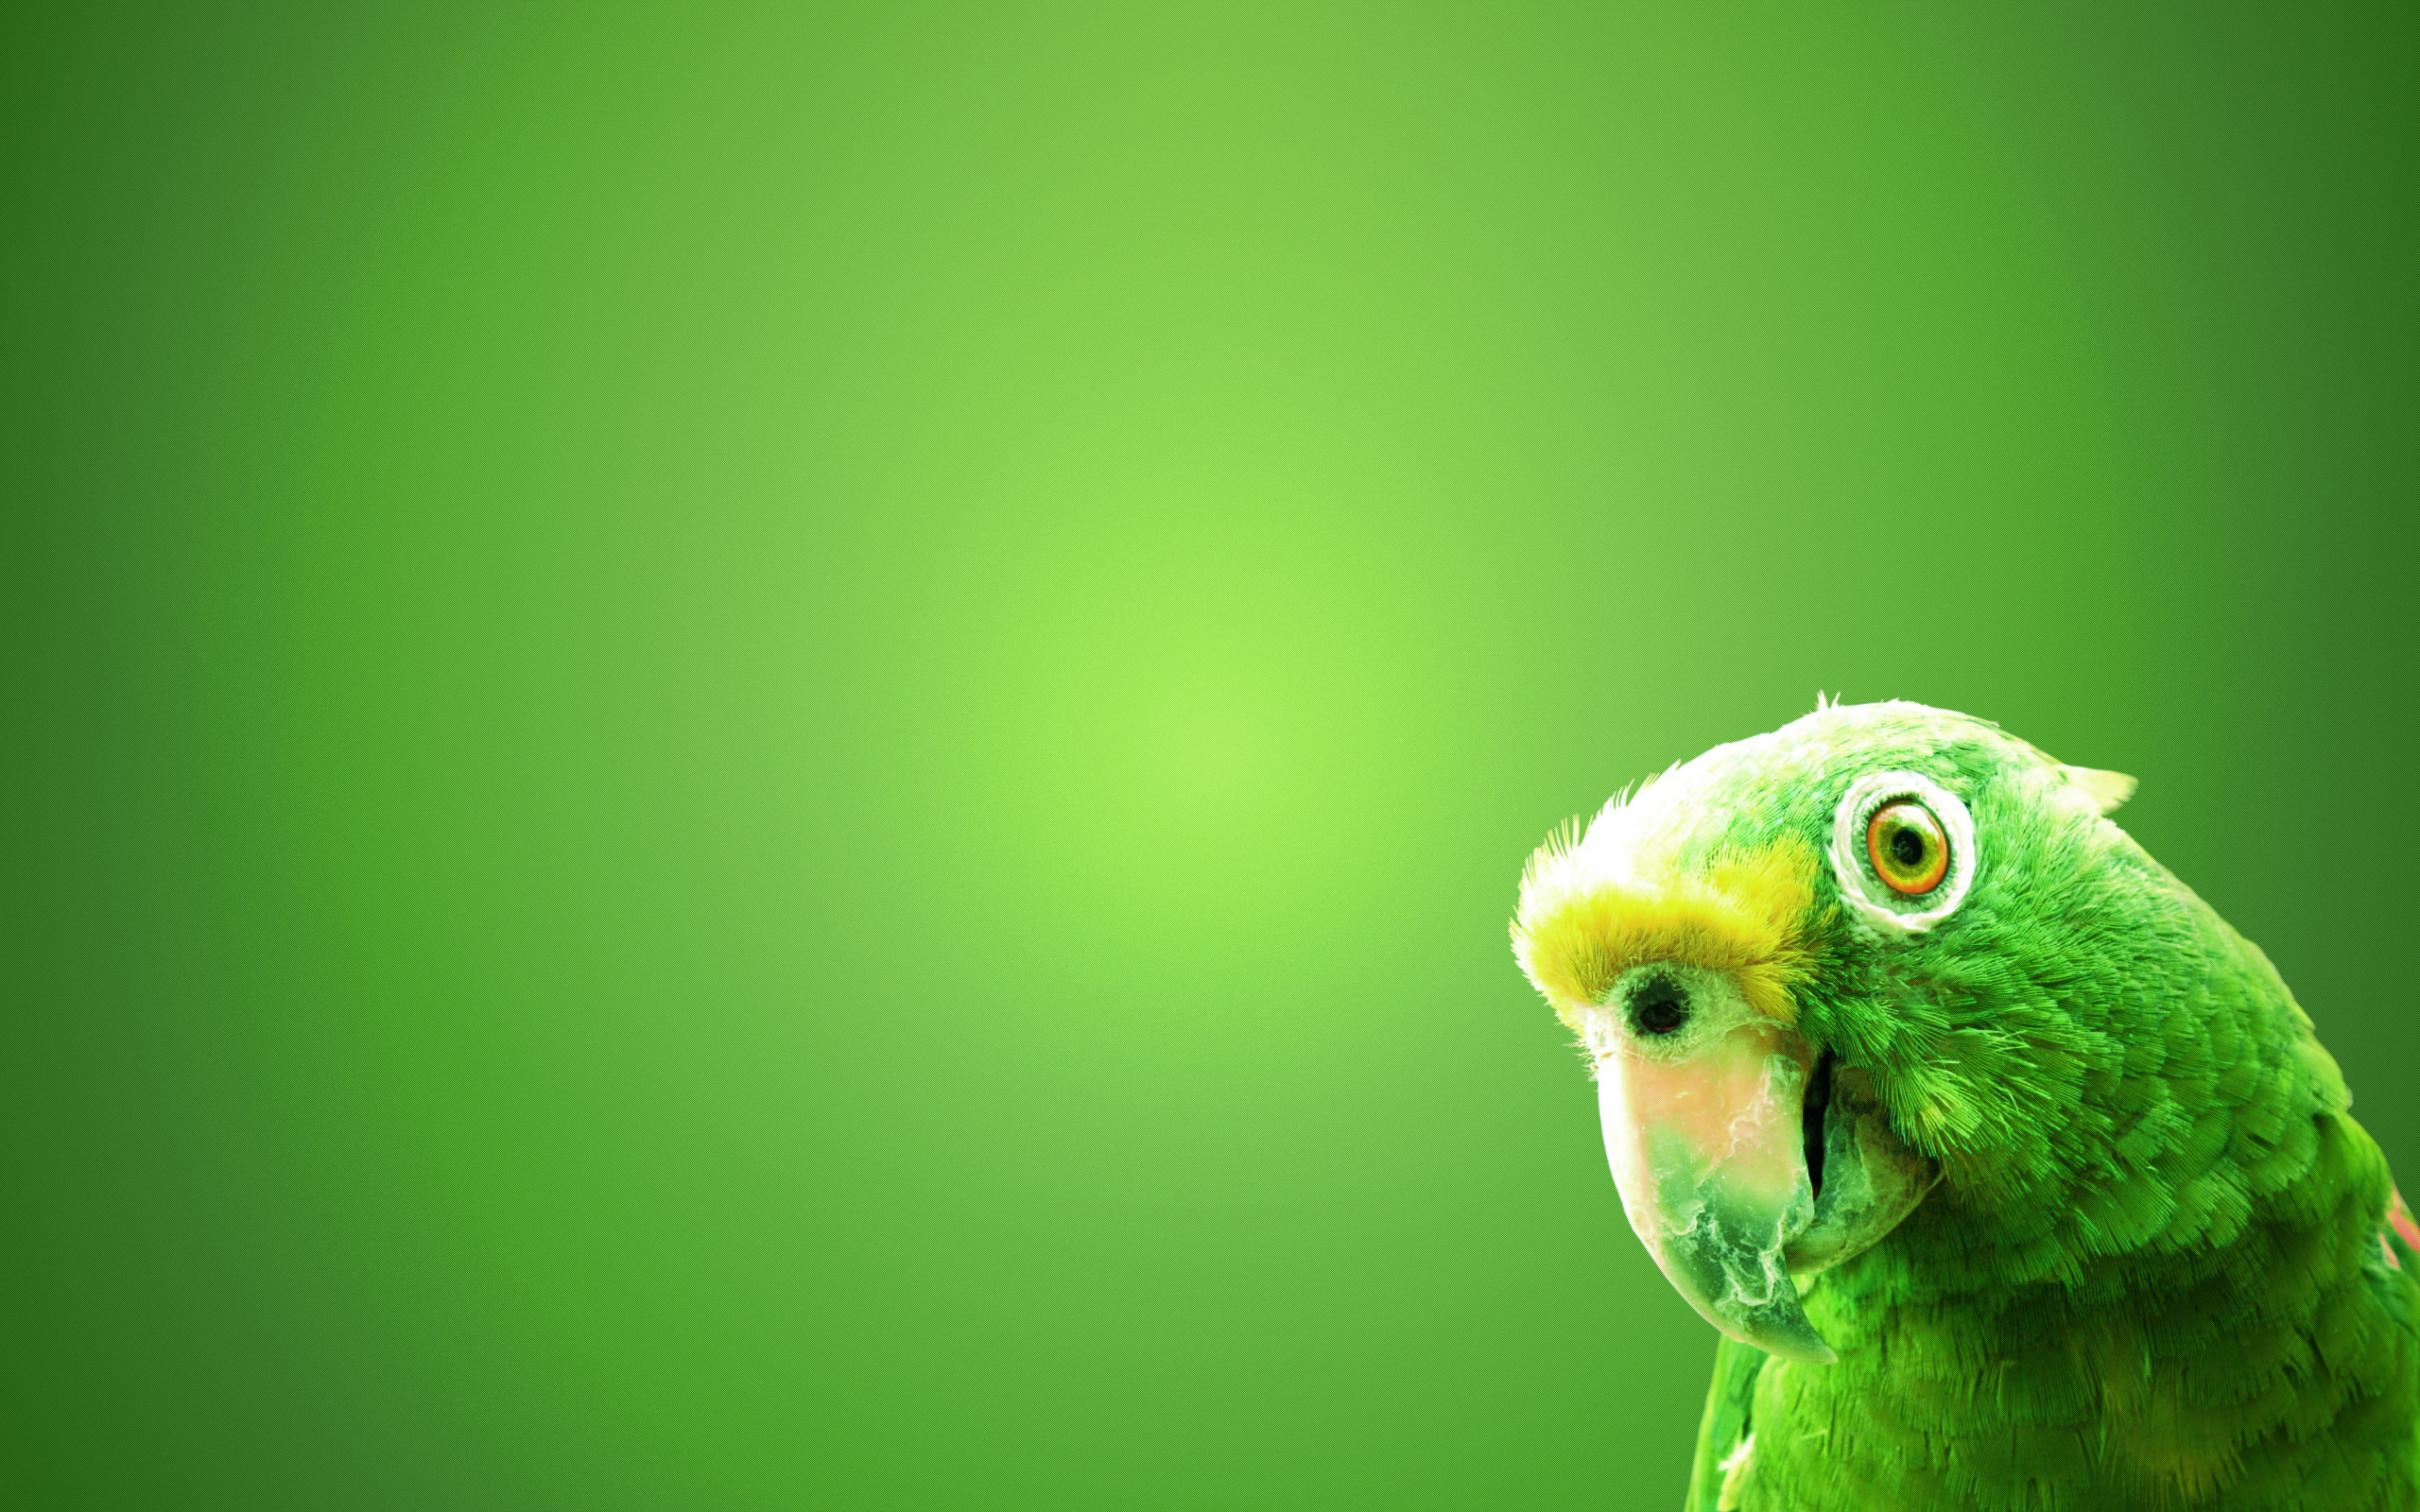 Green Parrot High Definition Wallpapers 2560x1600 Pixel 3 Mb Jpg